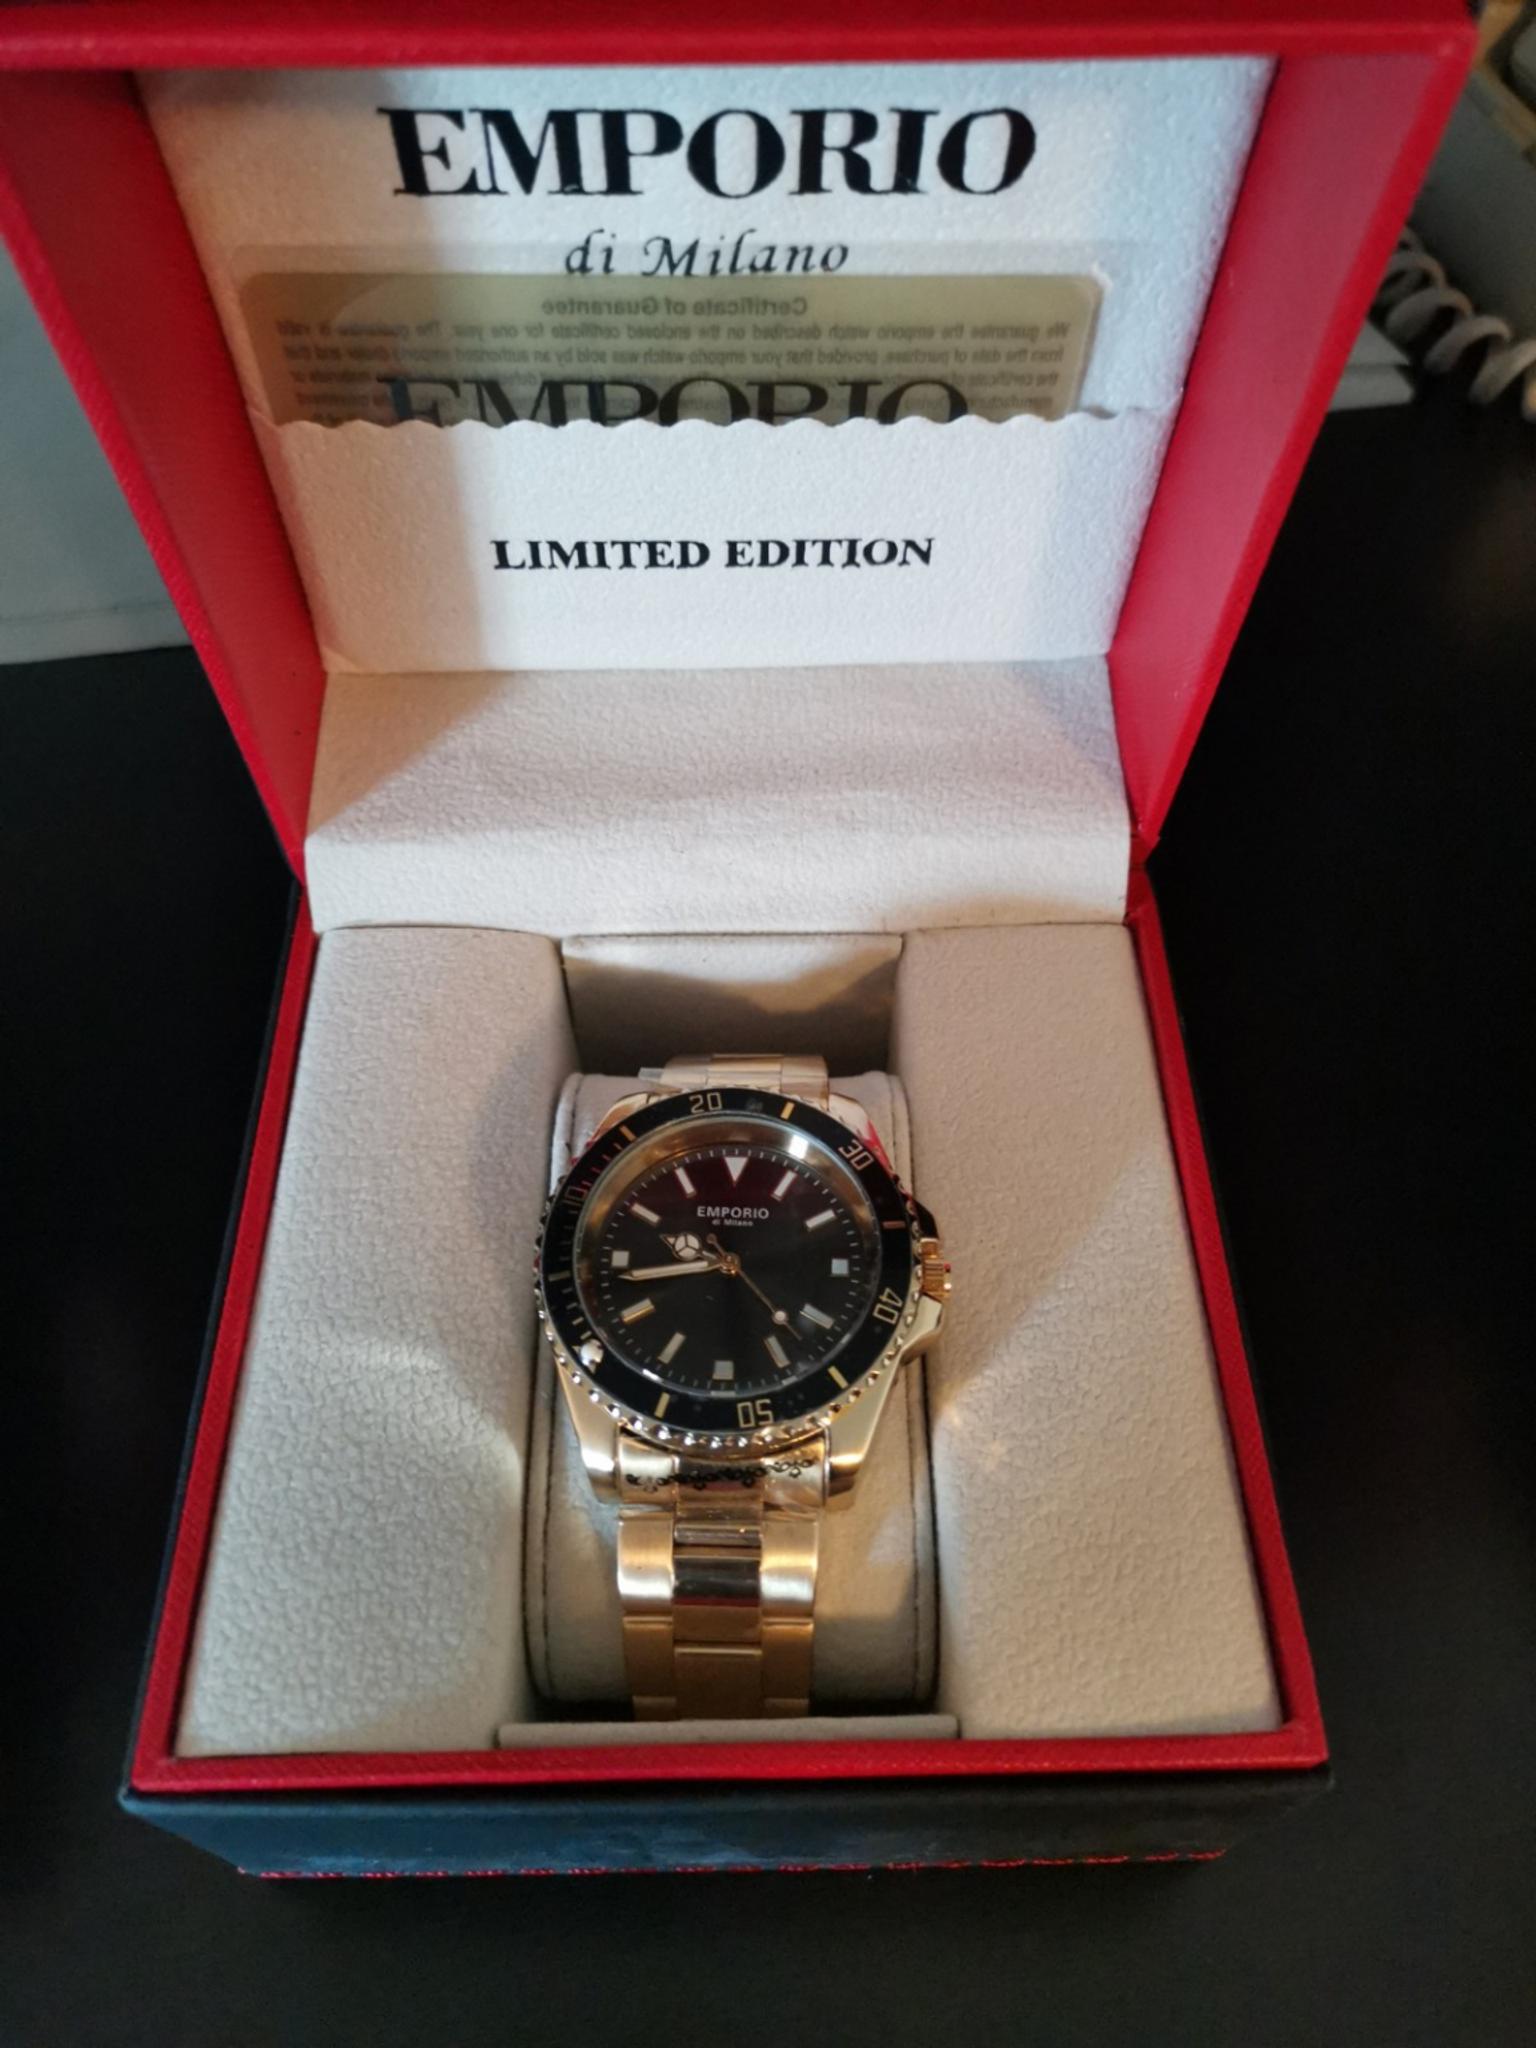 emporio di milano limited edition watch